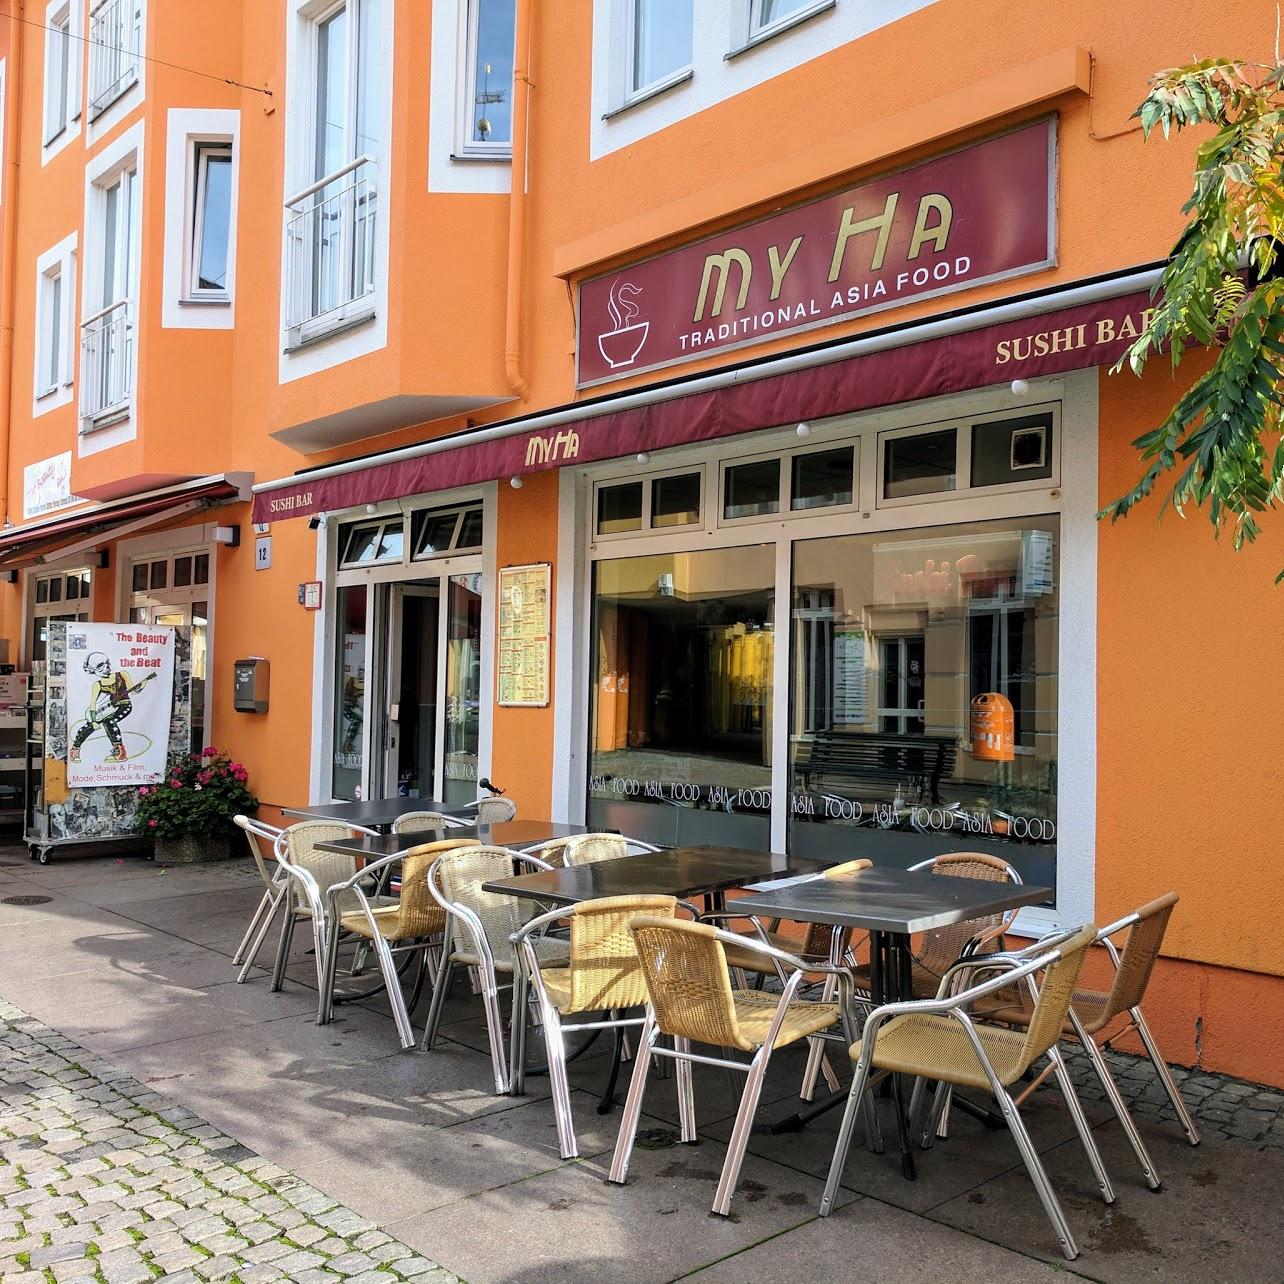 Restaurant "My Ha" in Berlin